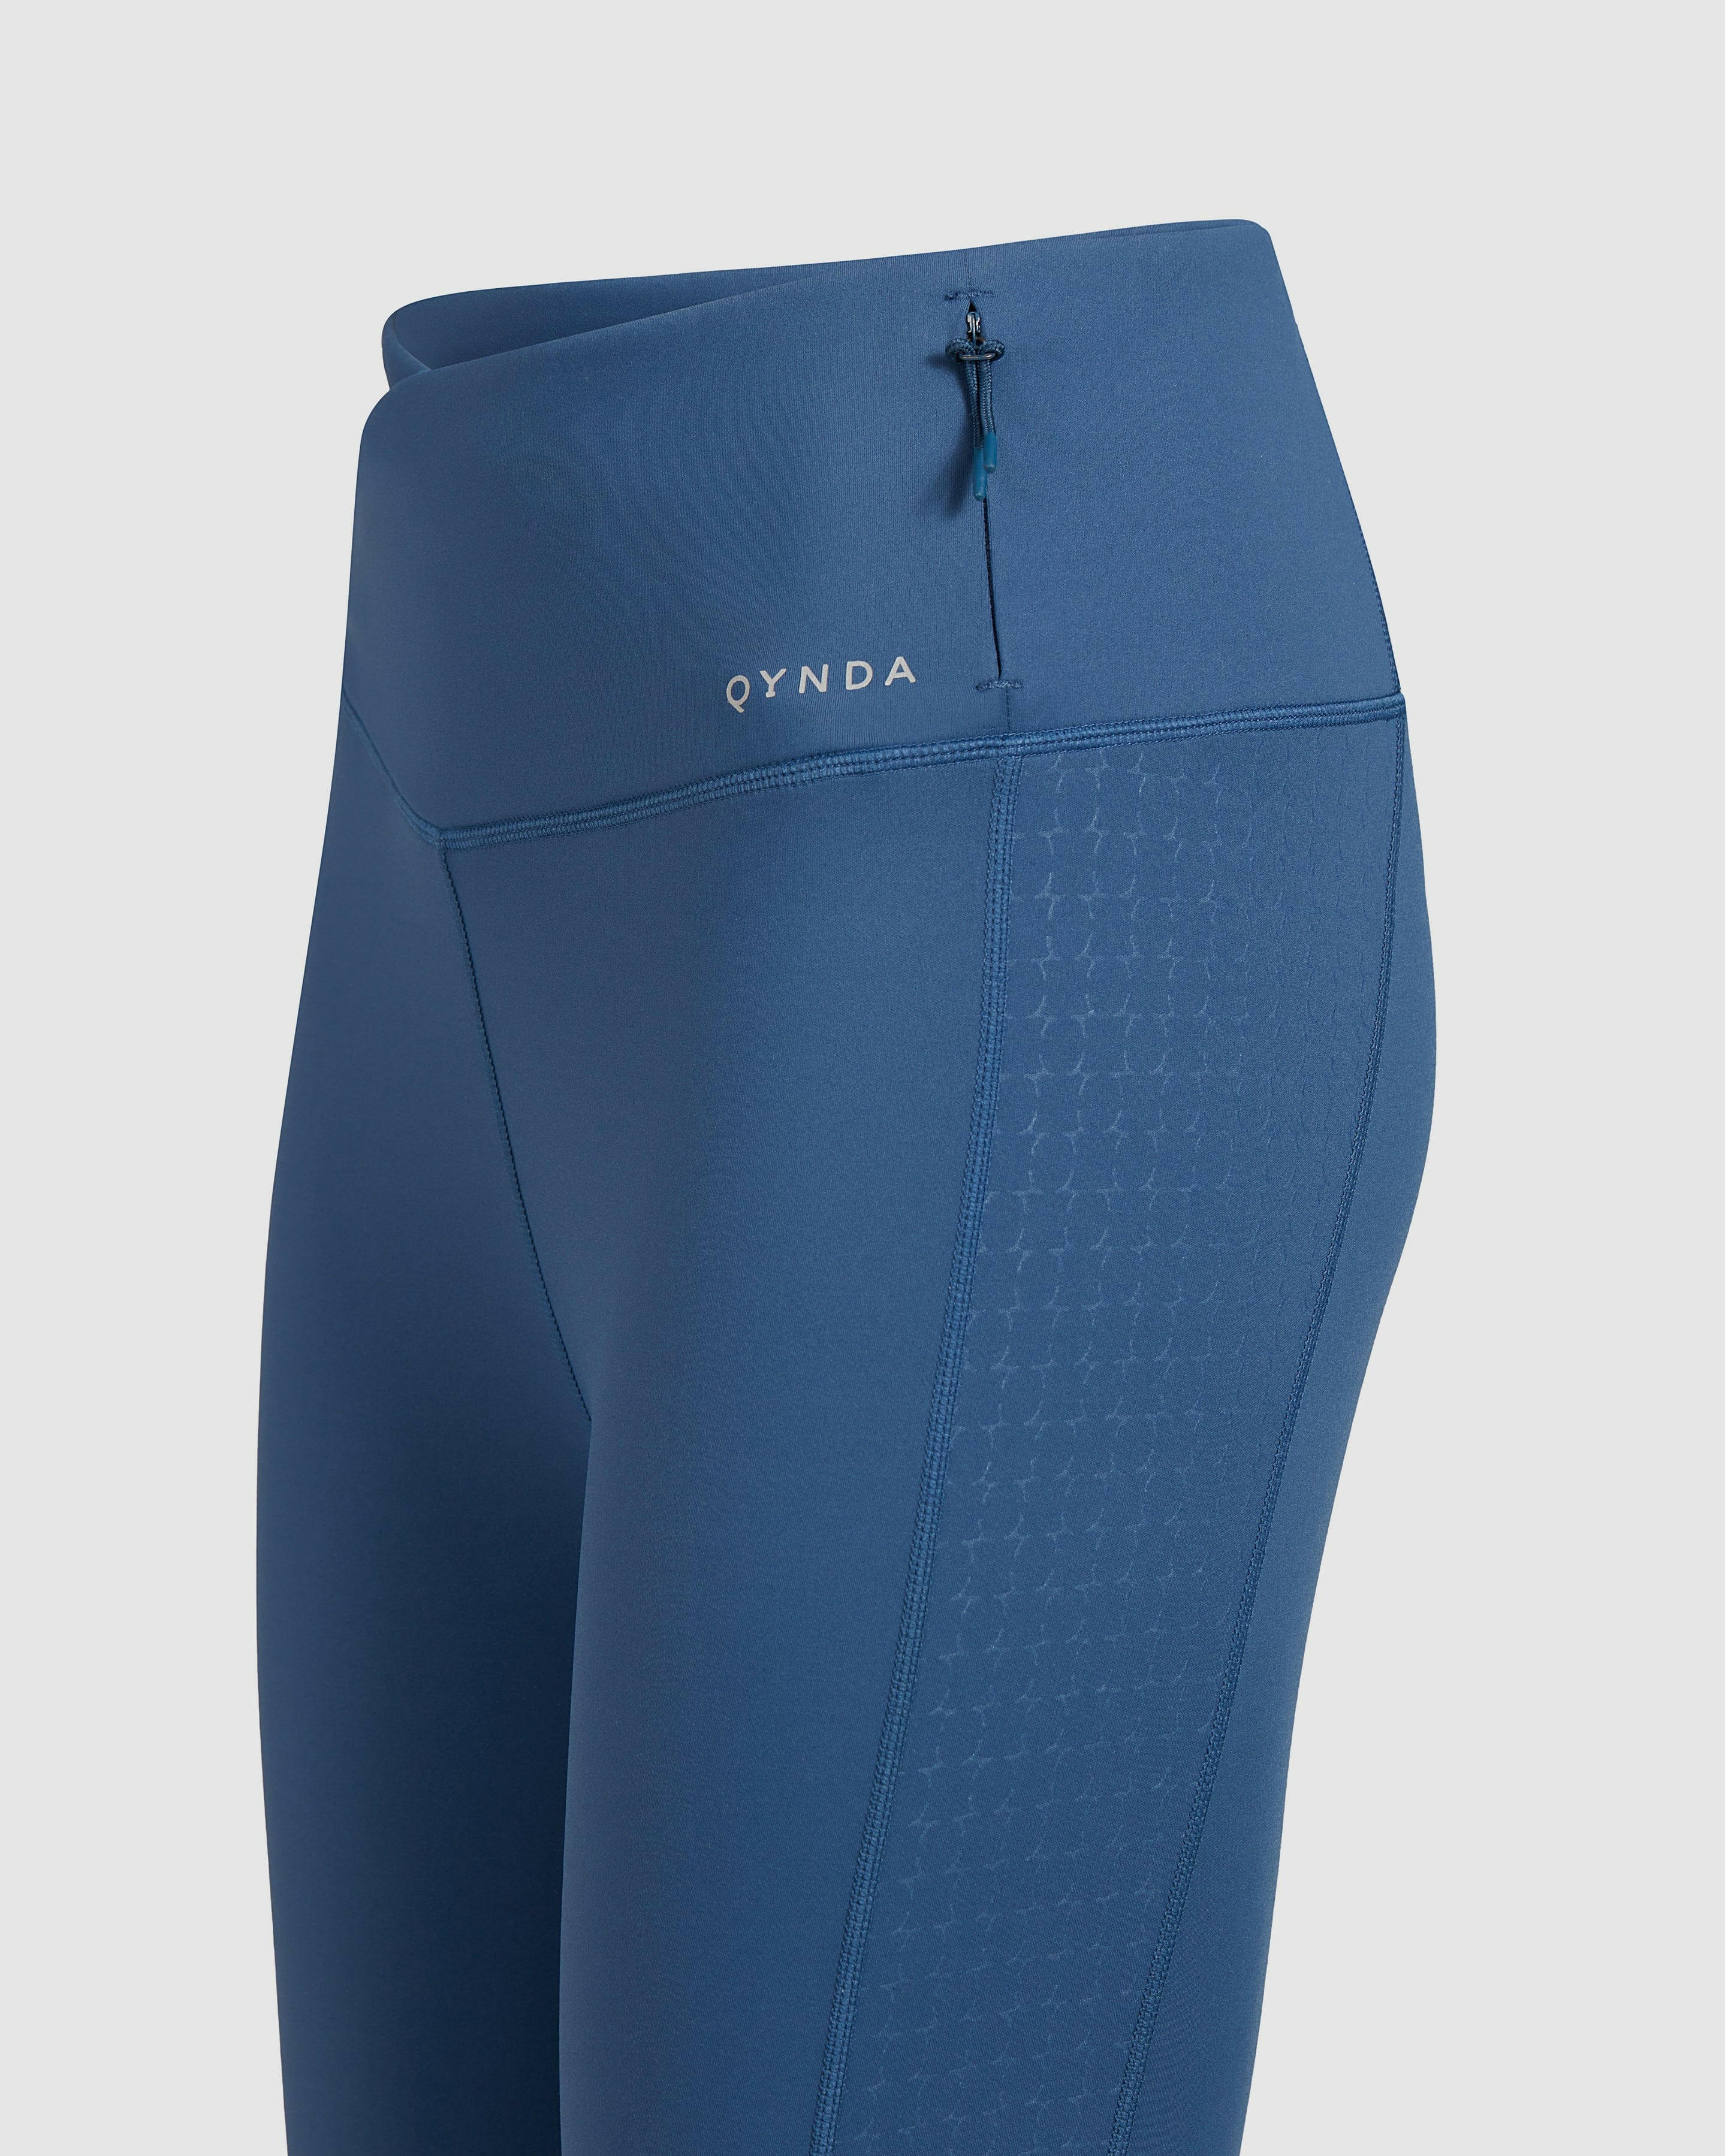 Close-up of a Dark Denim color Modest LADINA LEGGINGS featuring a subtle QYNDA brand logo and a drawstring waist detail.